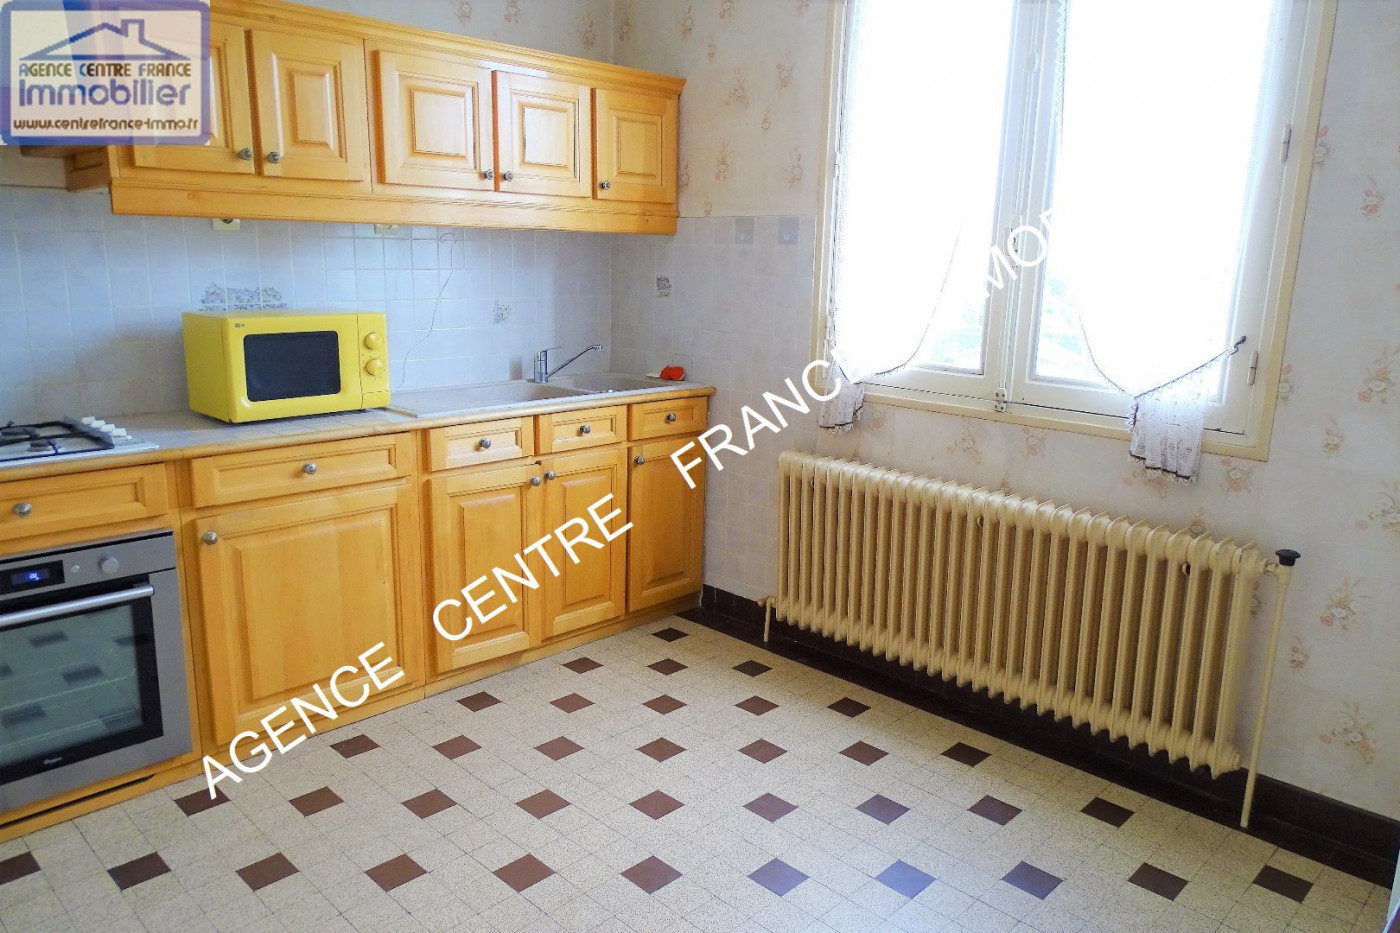 A vendre  Bourges | Réf 030011536 - Agence centre france immobilier